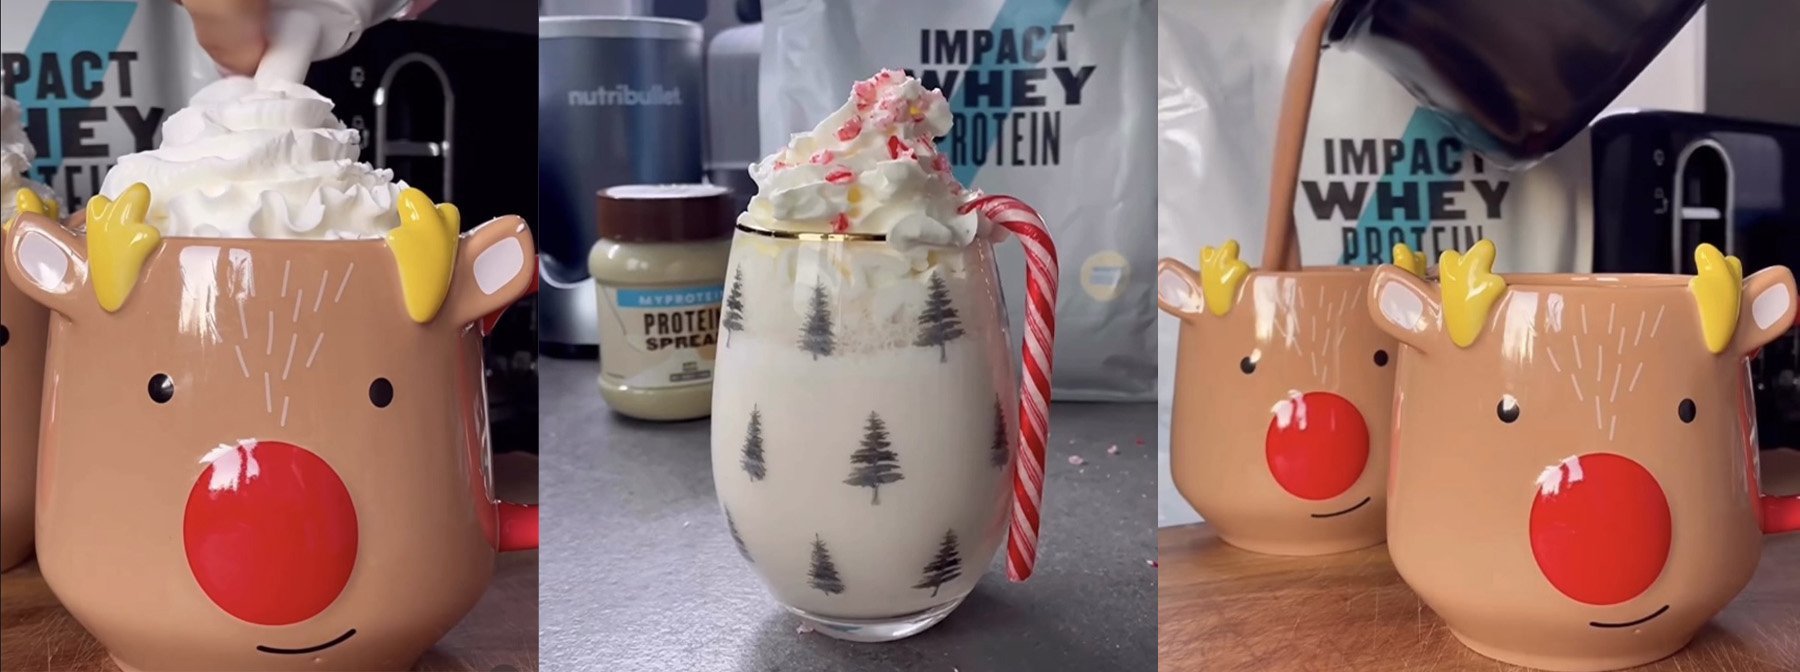 Protein Hot Chocolate 2 Ways